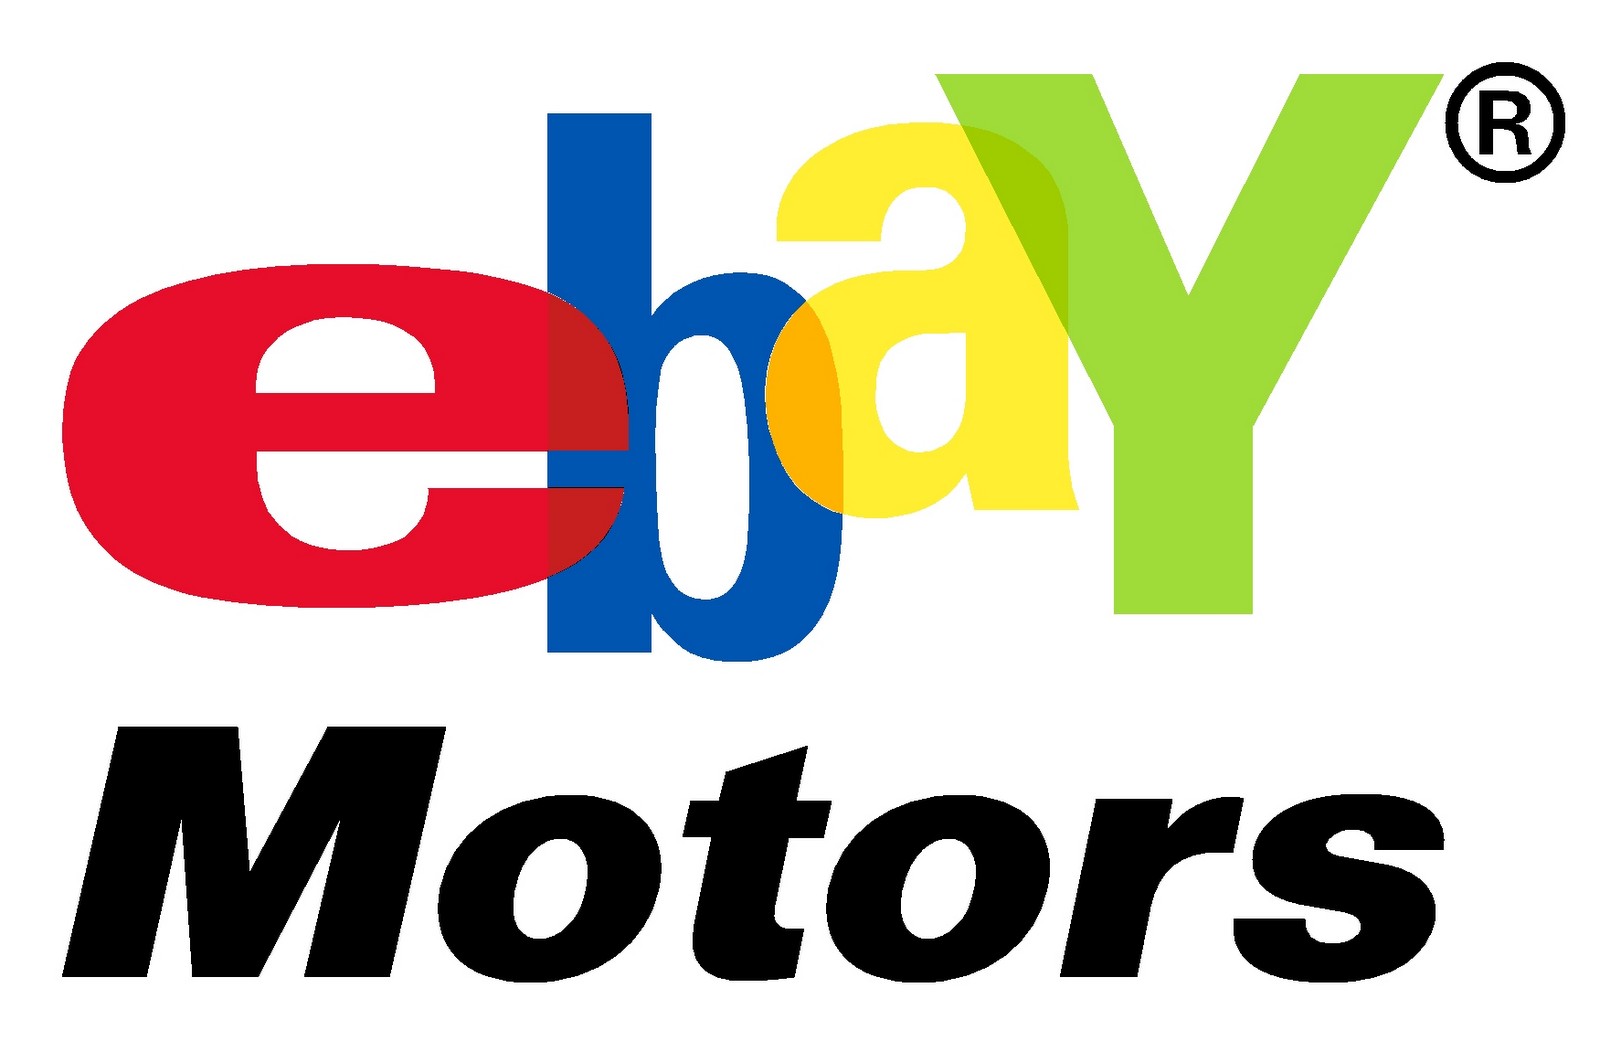 Ebay Logo Vector PNG - 97838